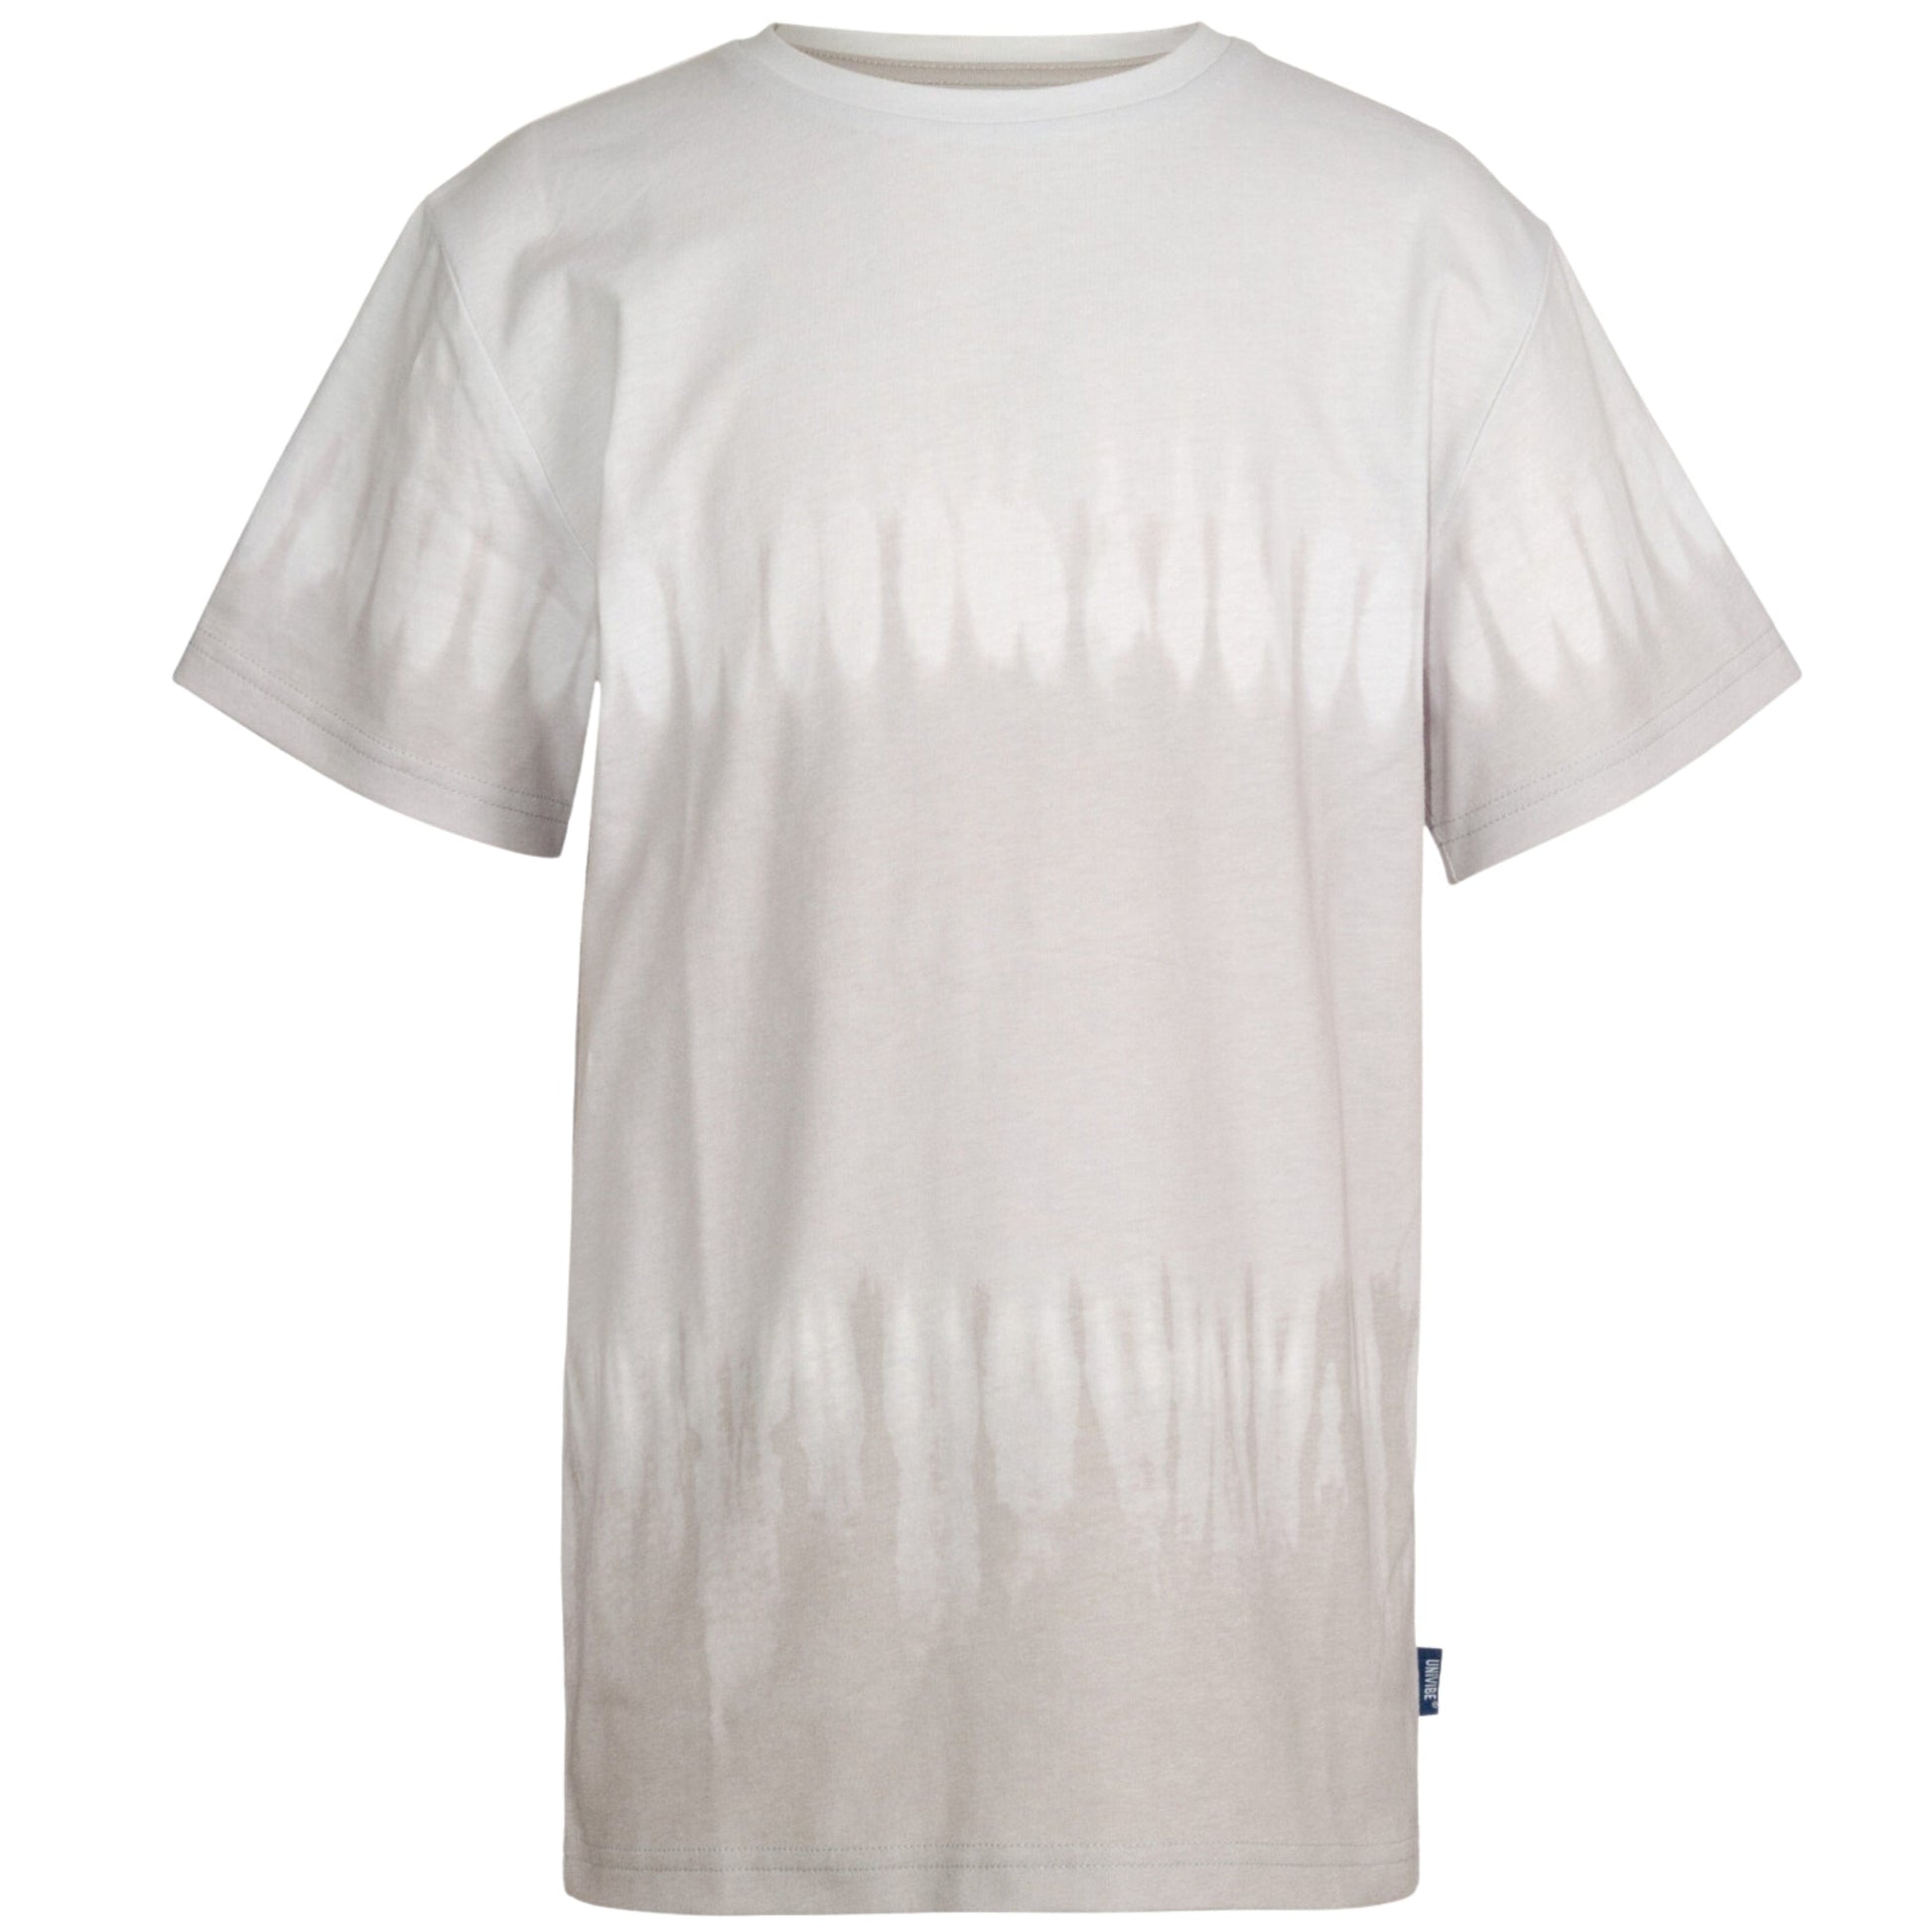 UNIVIBE Boys Tops S / Multi-Color UNIVIBE - KIDS - Toto Blocked Tie-Dye Print Crew T-shirt